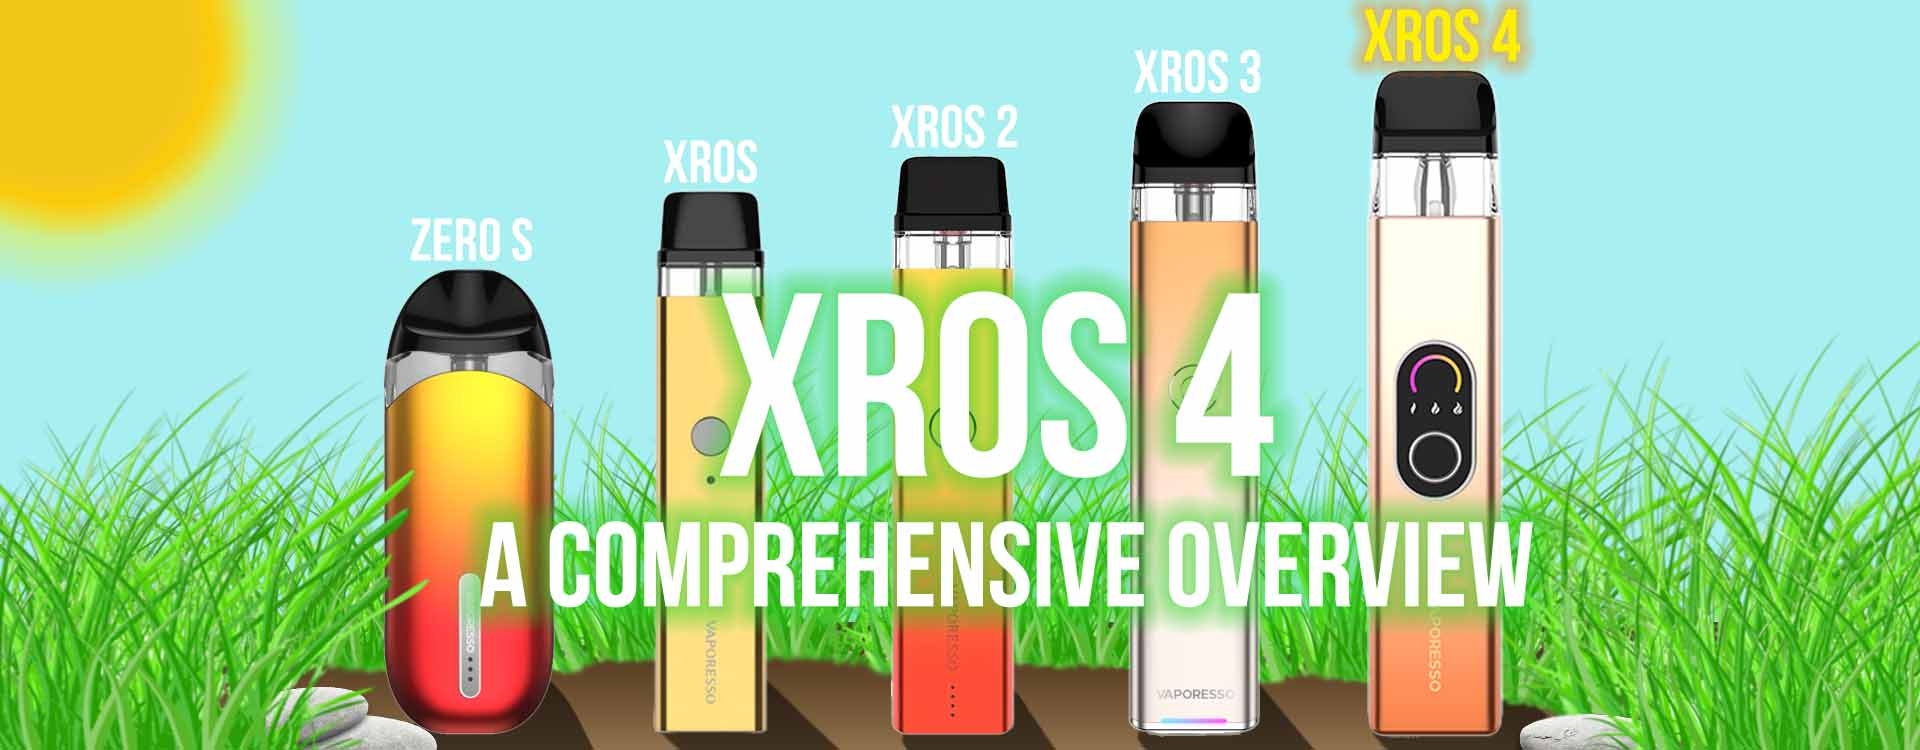 Explore the New Vaporesso XROS 4 Series: A Comprehensive Overview